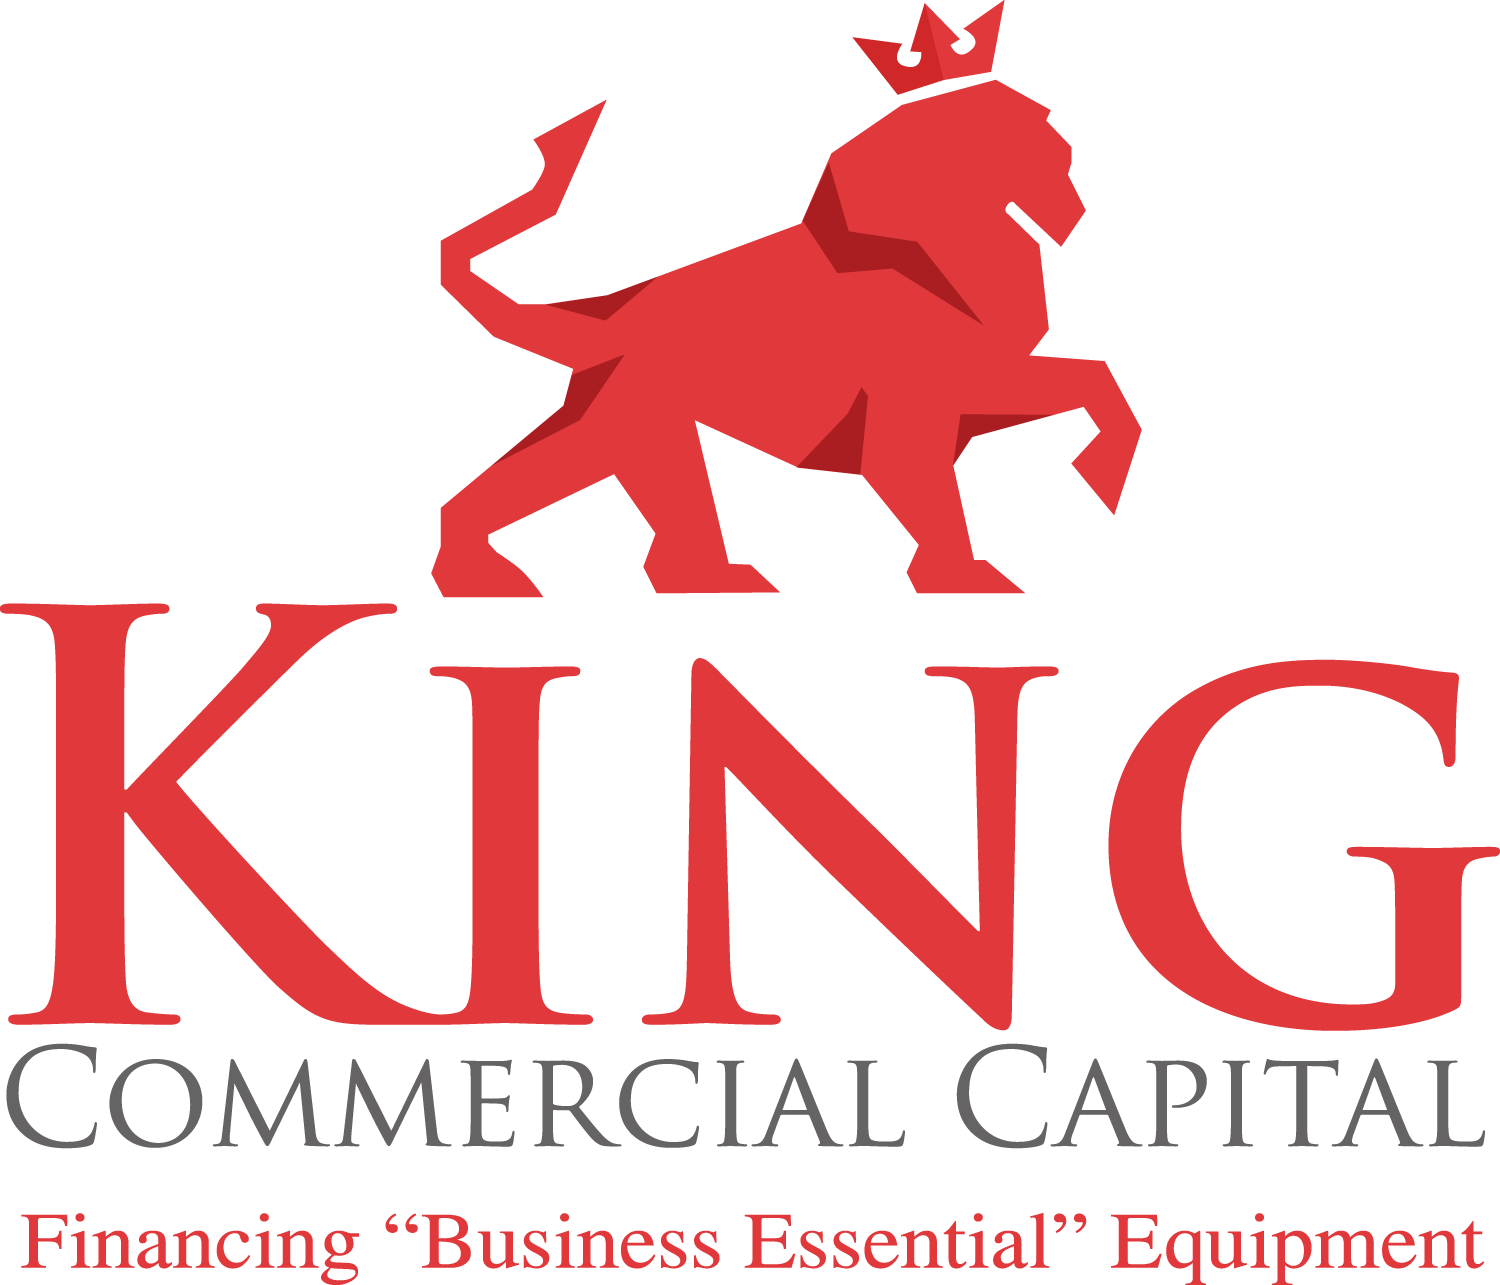 King Commercial Capital Logo - Equipment financing